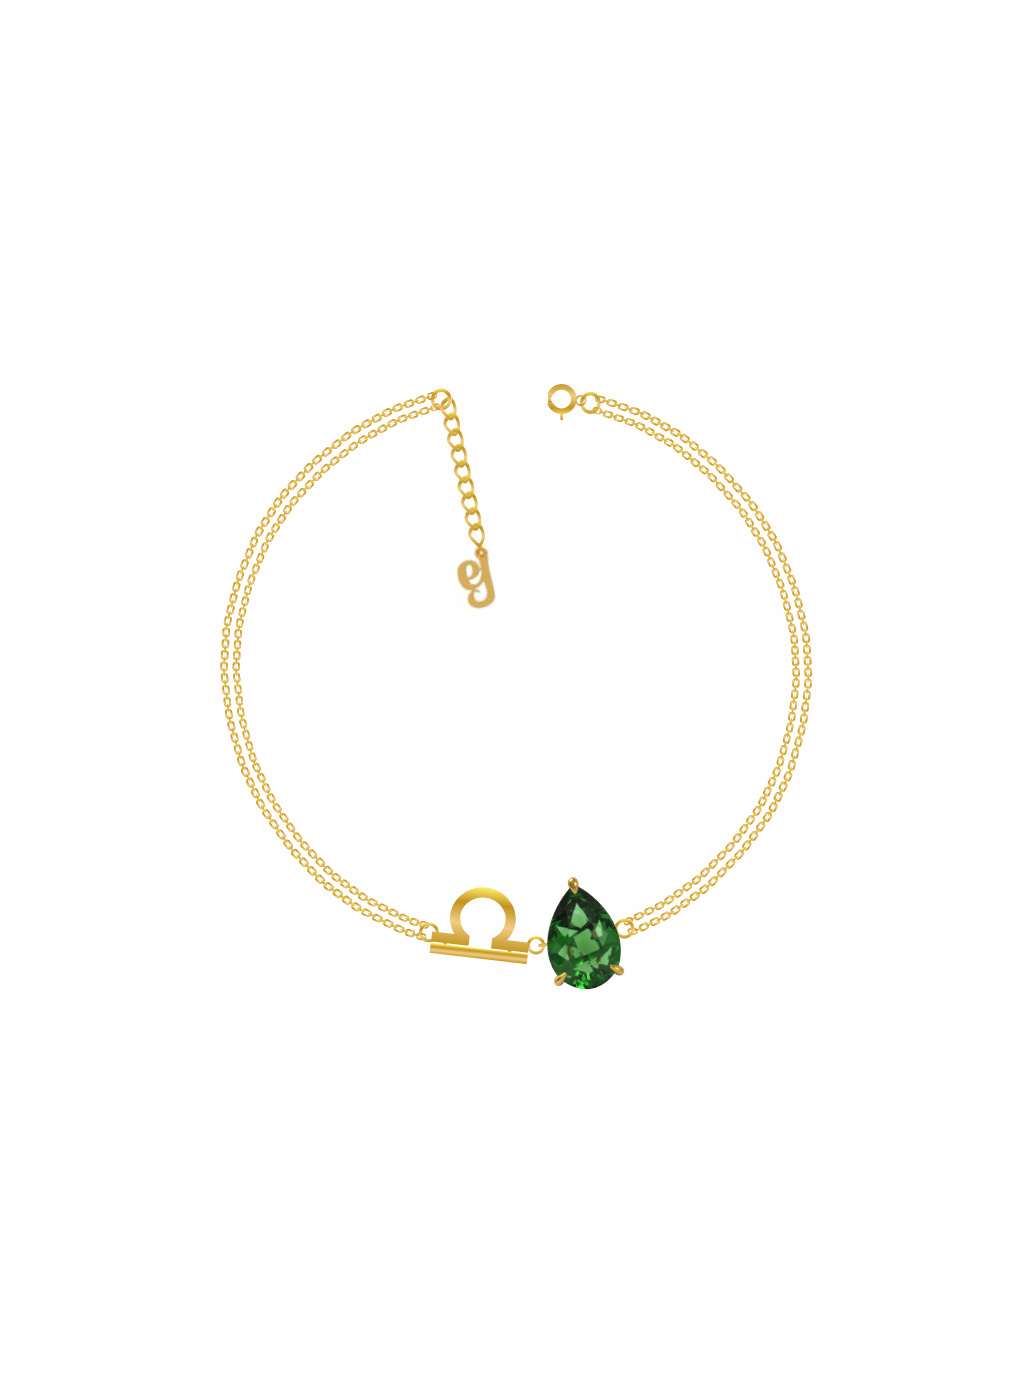 zodiac sign bracelet- libra- gold